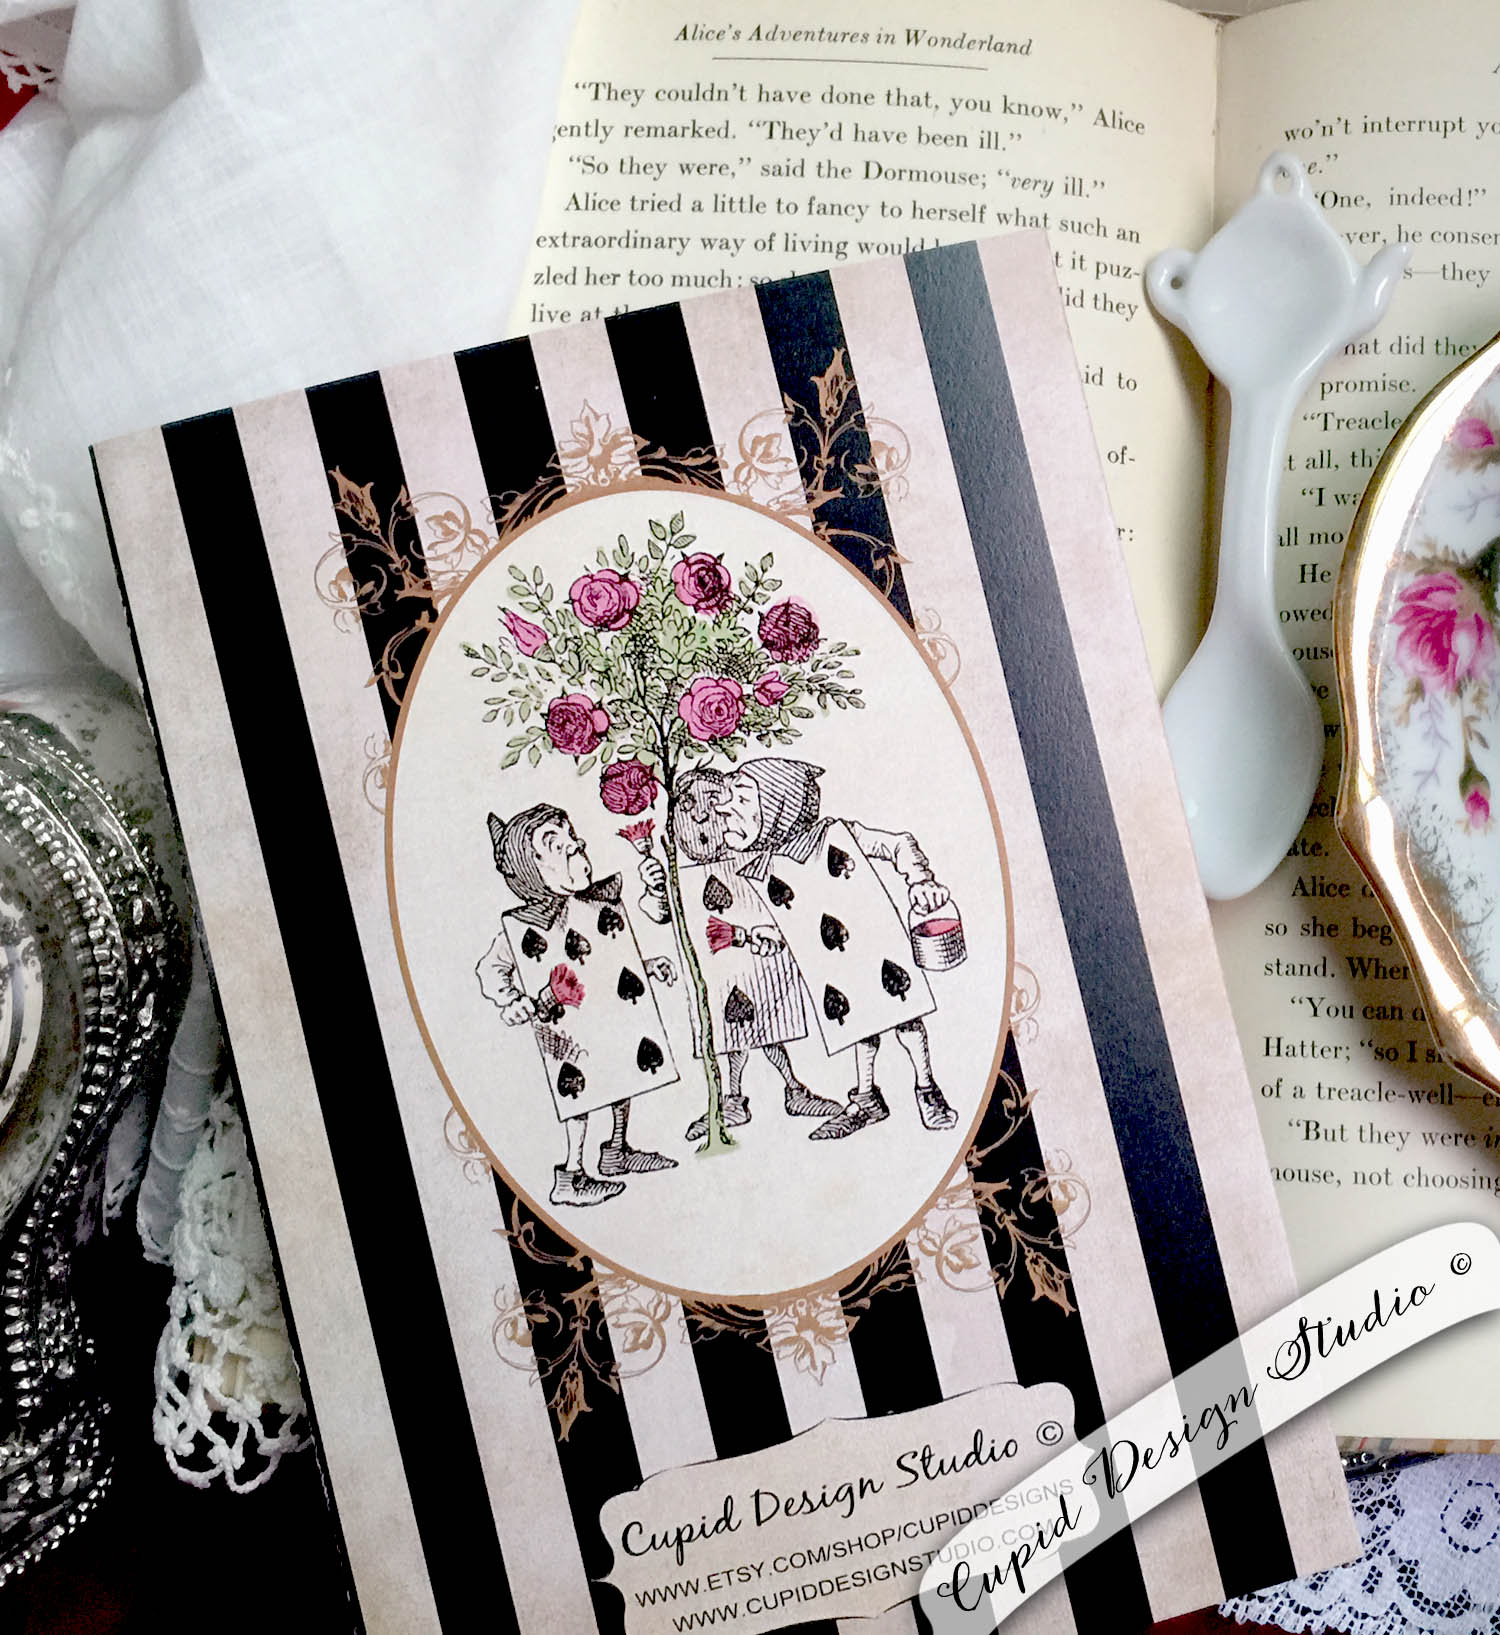 Vintage Alice in Wonderland Invitations for a Mad Hatters Tea